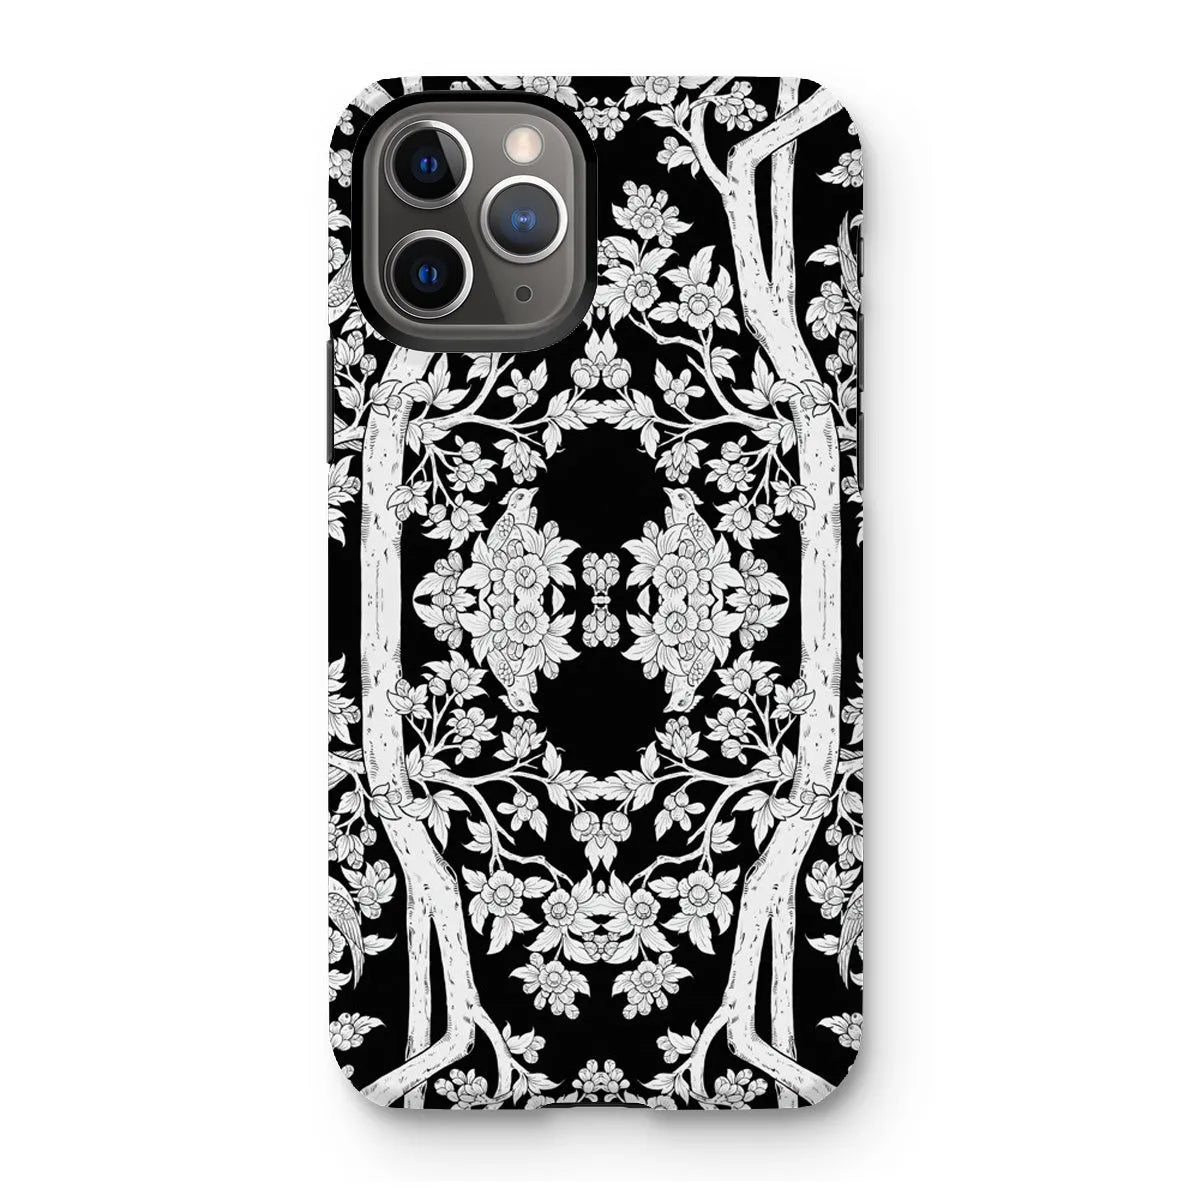 Aviary Black Aesthetic Pattern Art Phone Case - Iphone 11 Pro / Matte - Mobile Phone Cases - Aesthetic Art